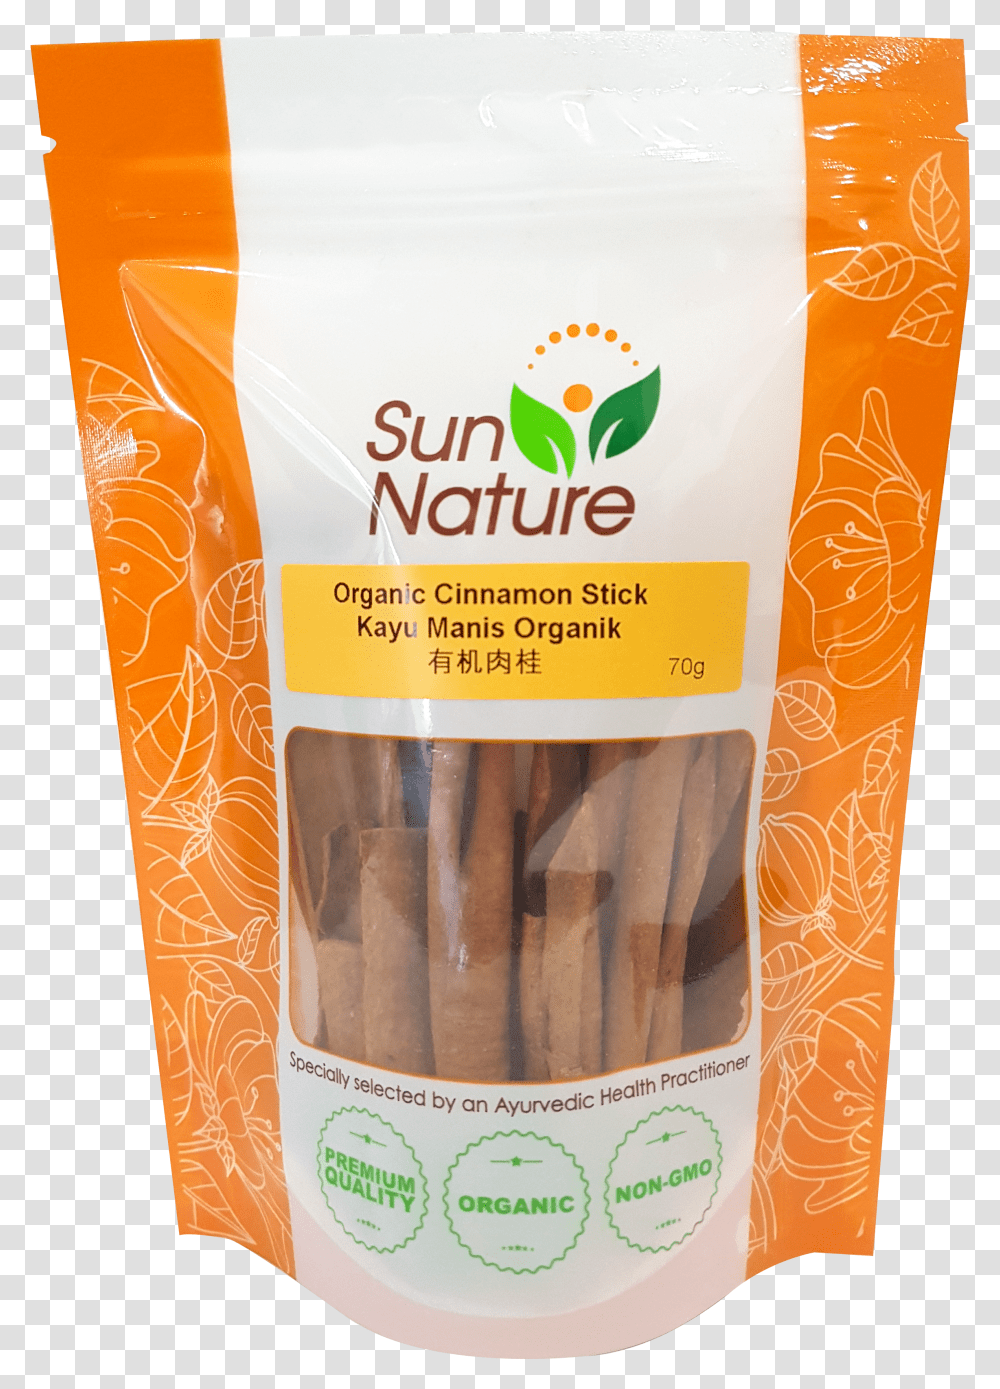 Cinnamon Stick Sun Nature Chia Seed Transparent Png